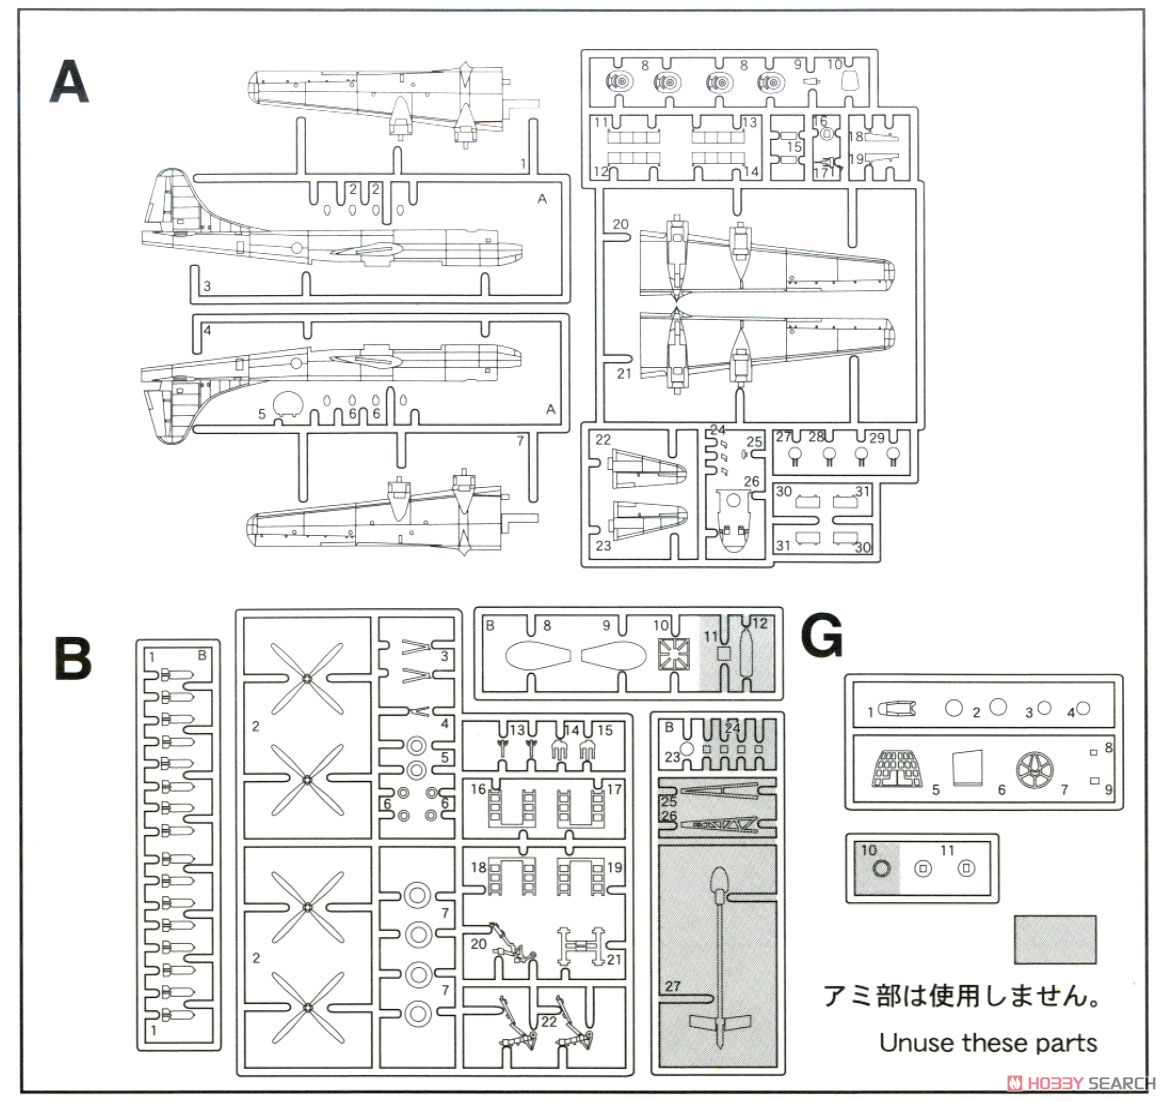 B-29 スーパーフォートレス 東京ローズ/ヘブンリー・レイデン (プラモデル) 設計図2